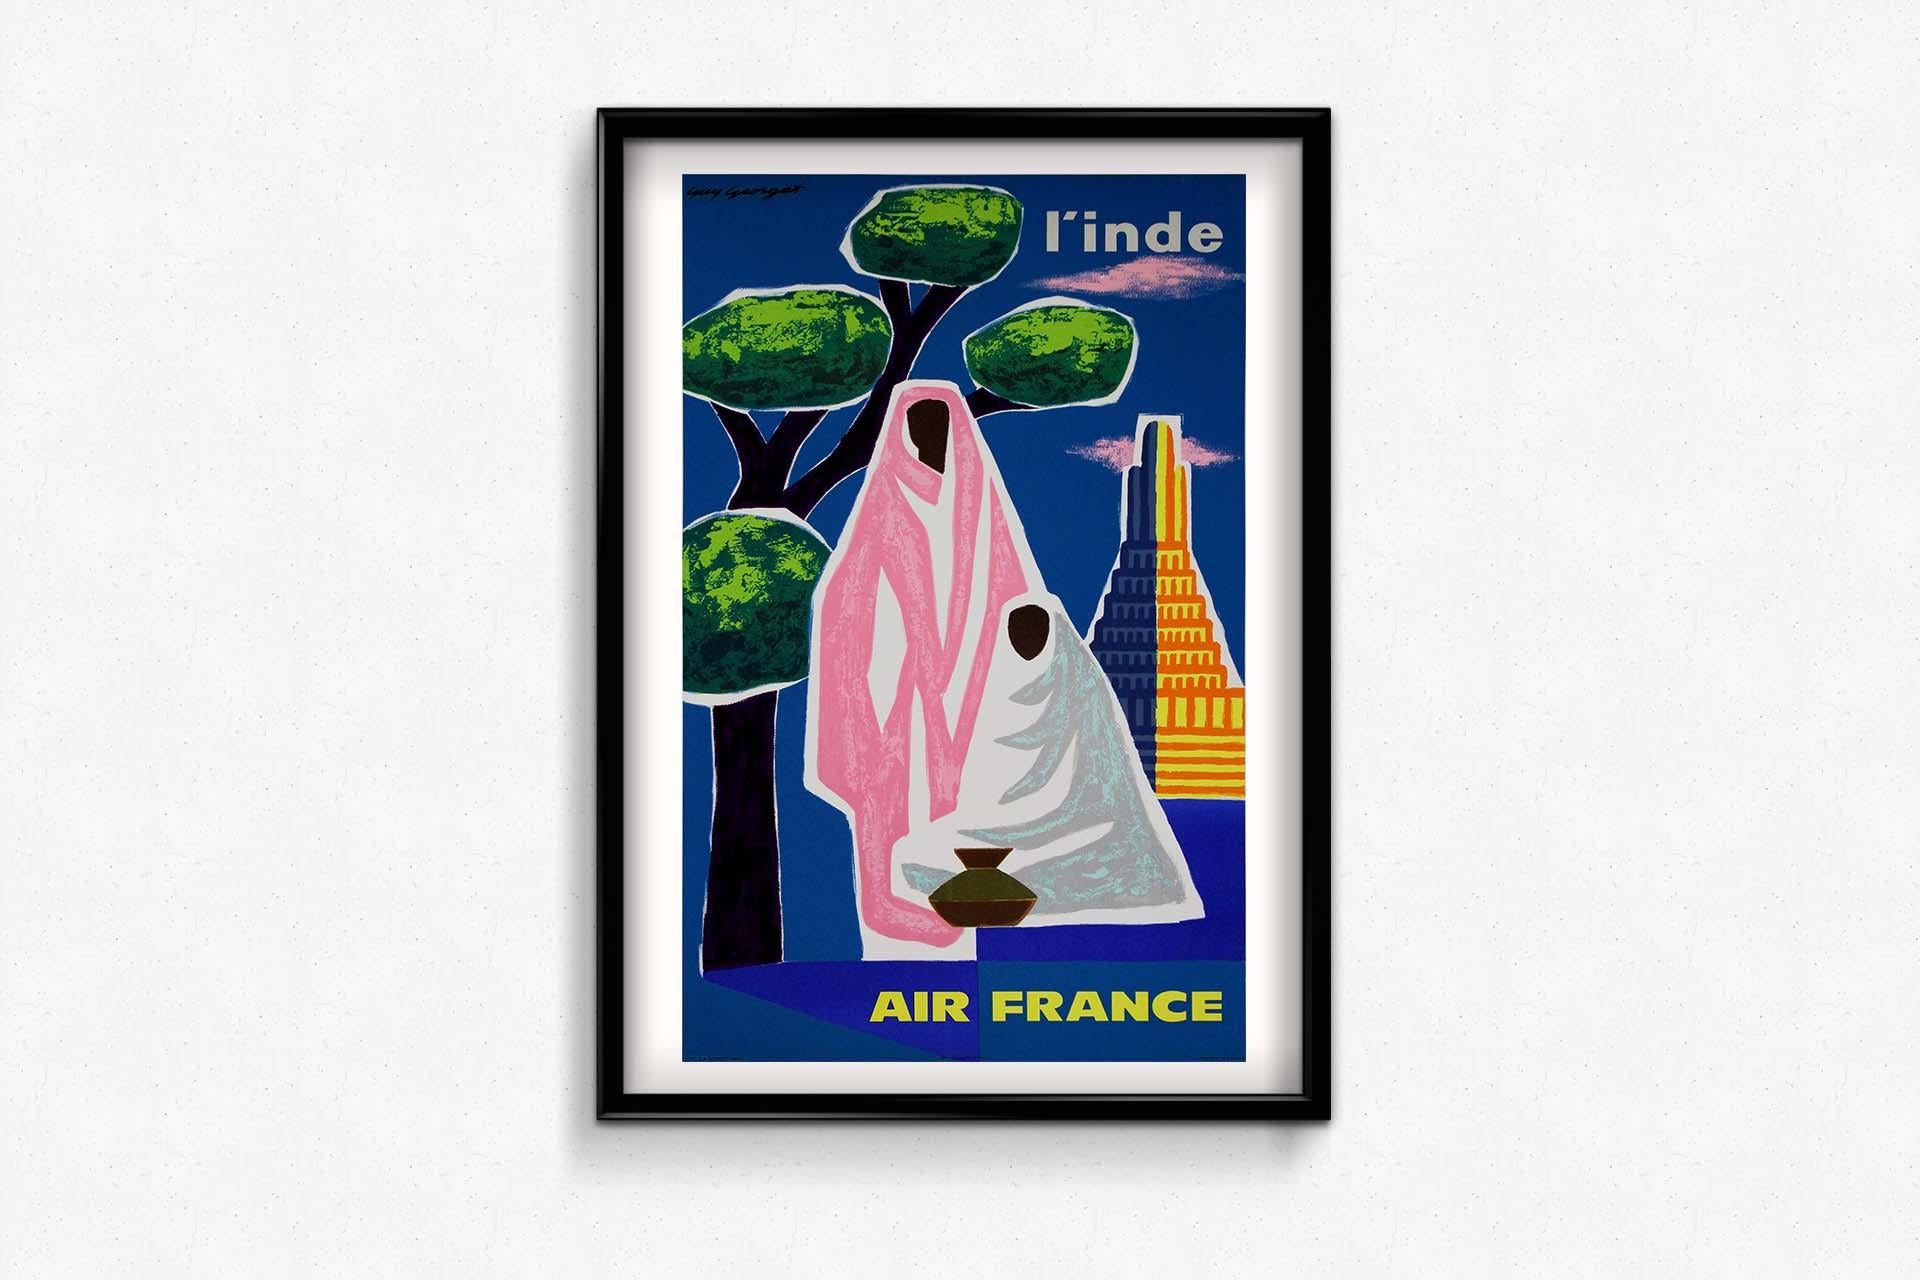 1962 Original travel poster by Guy Georget - Air France l'Inde For Sale 1